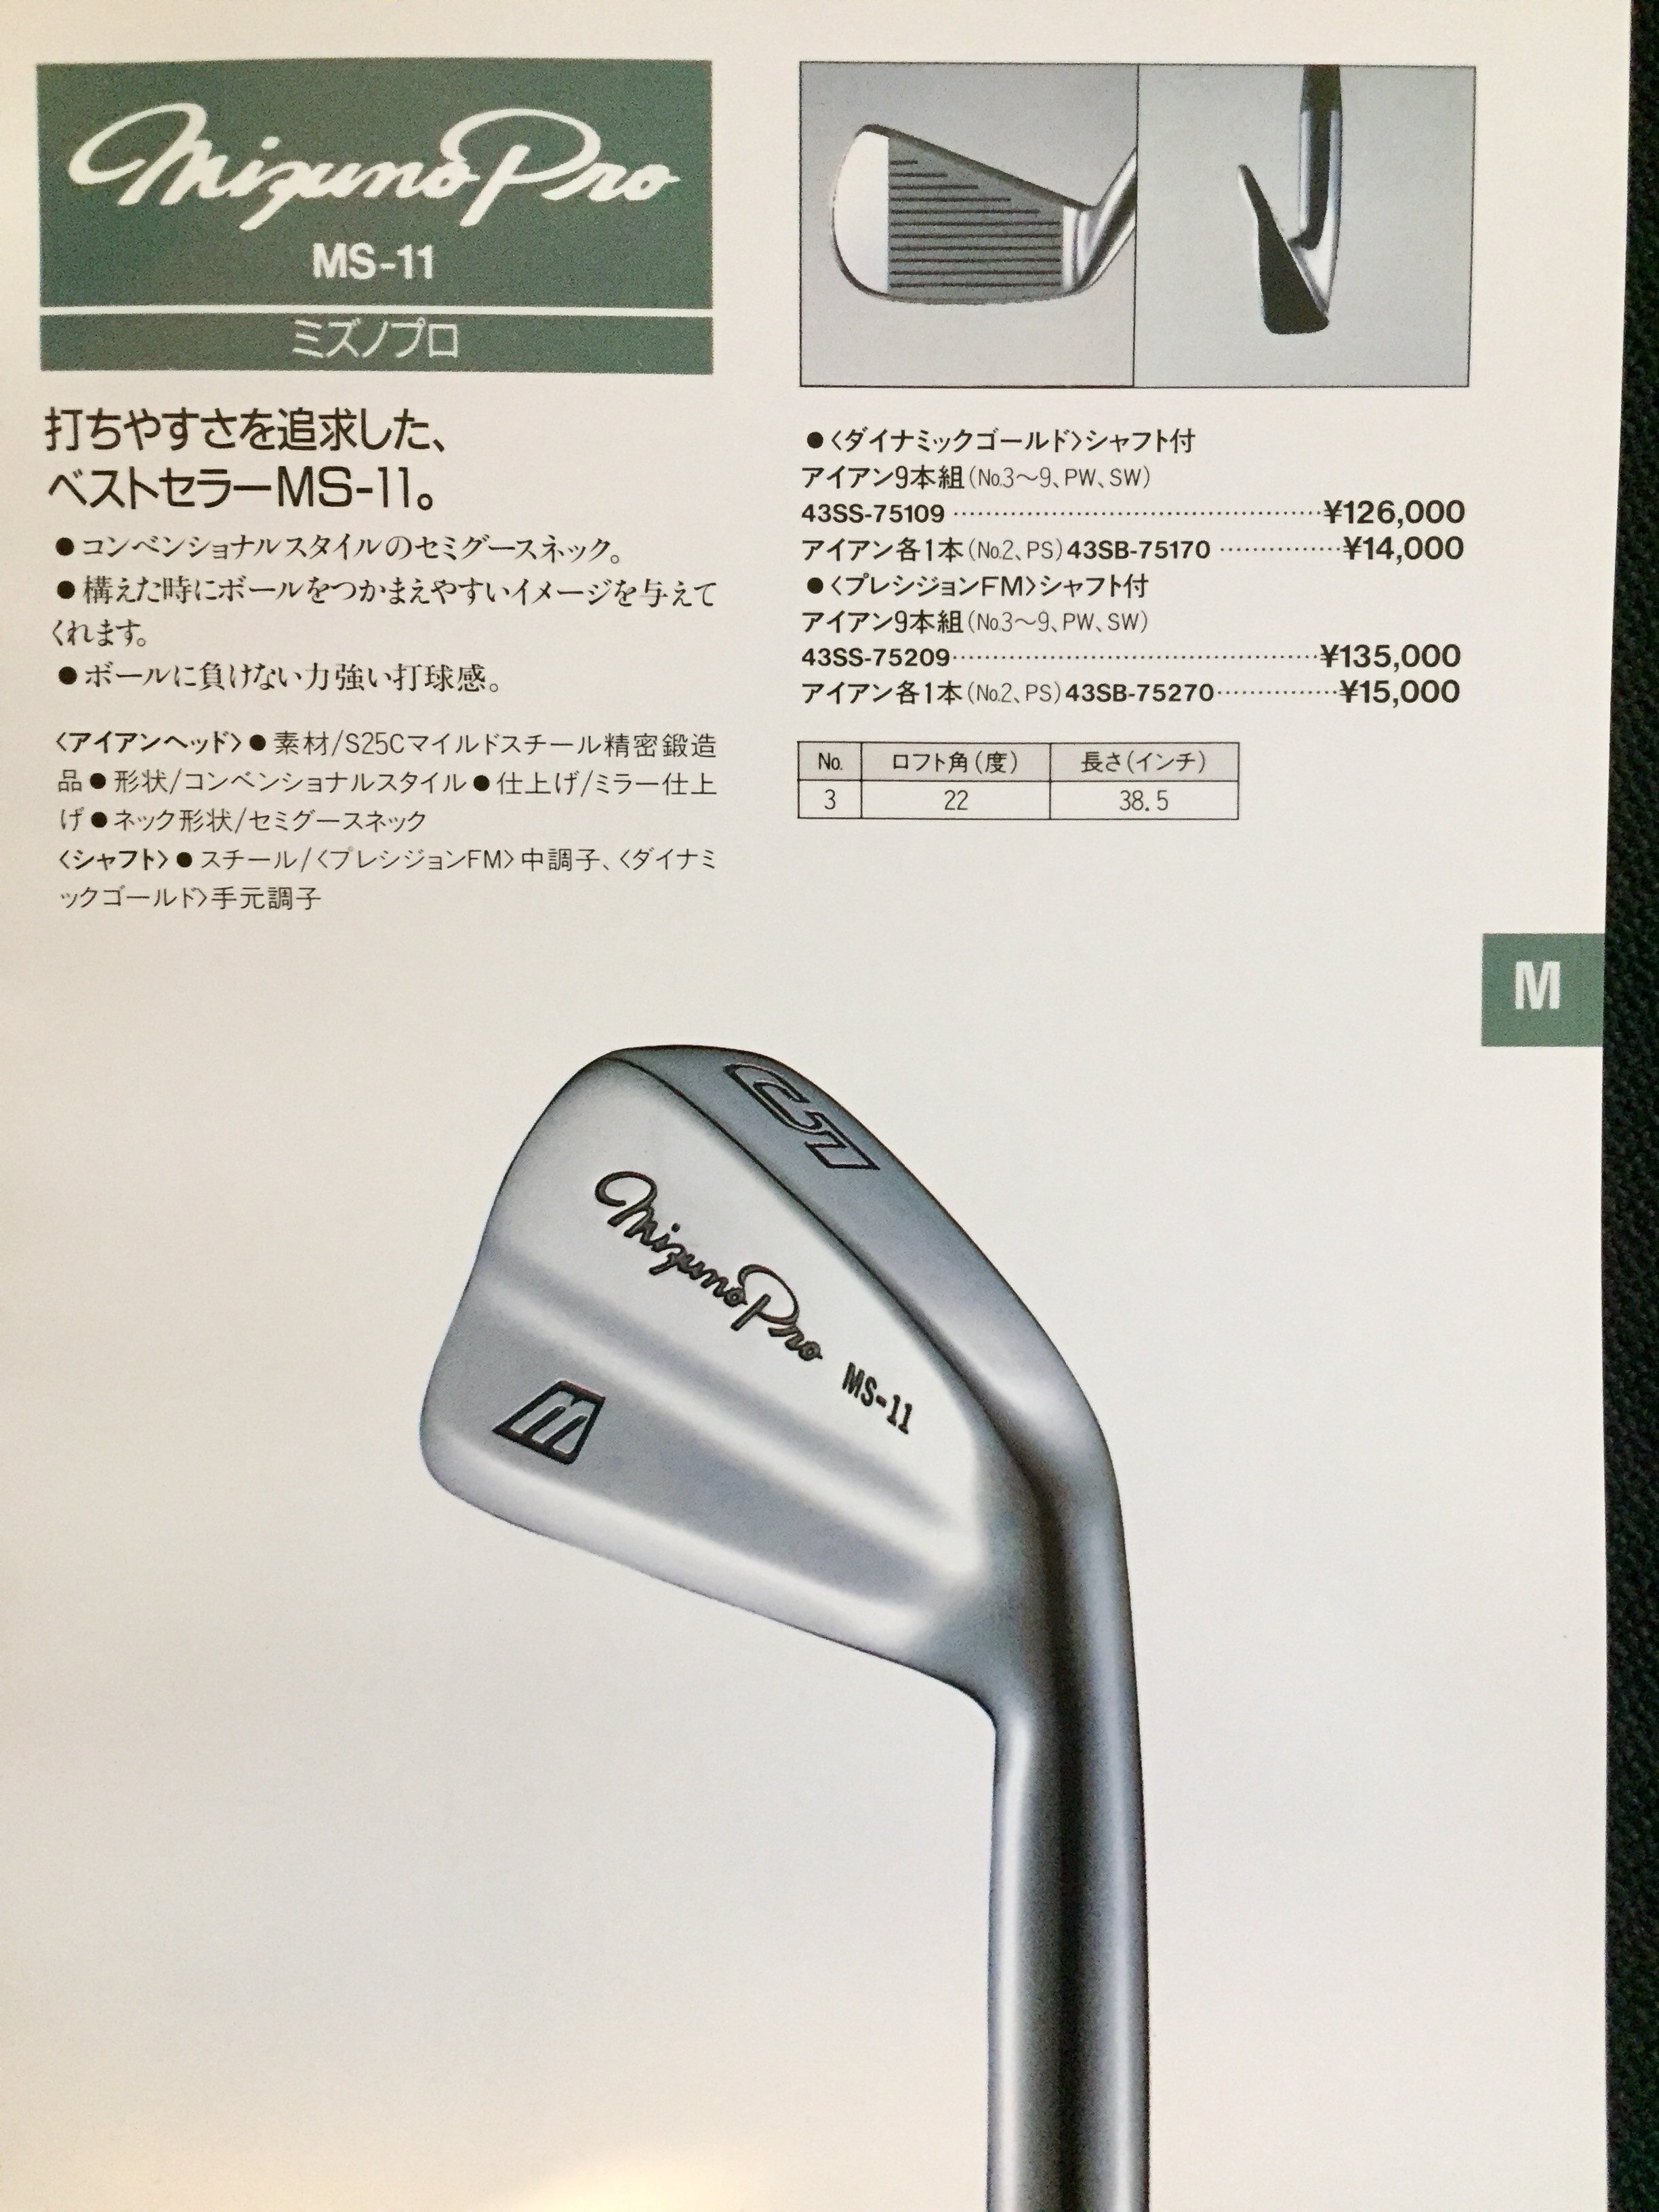 MizunoDBG – vintage Mizuno golf equipment